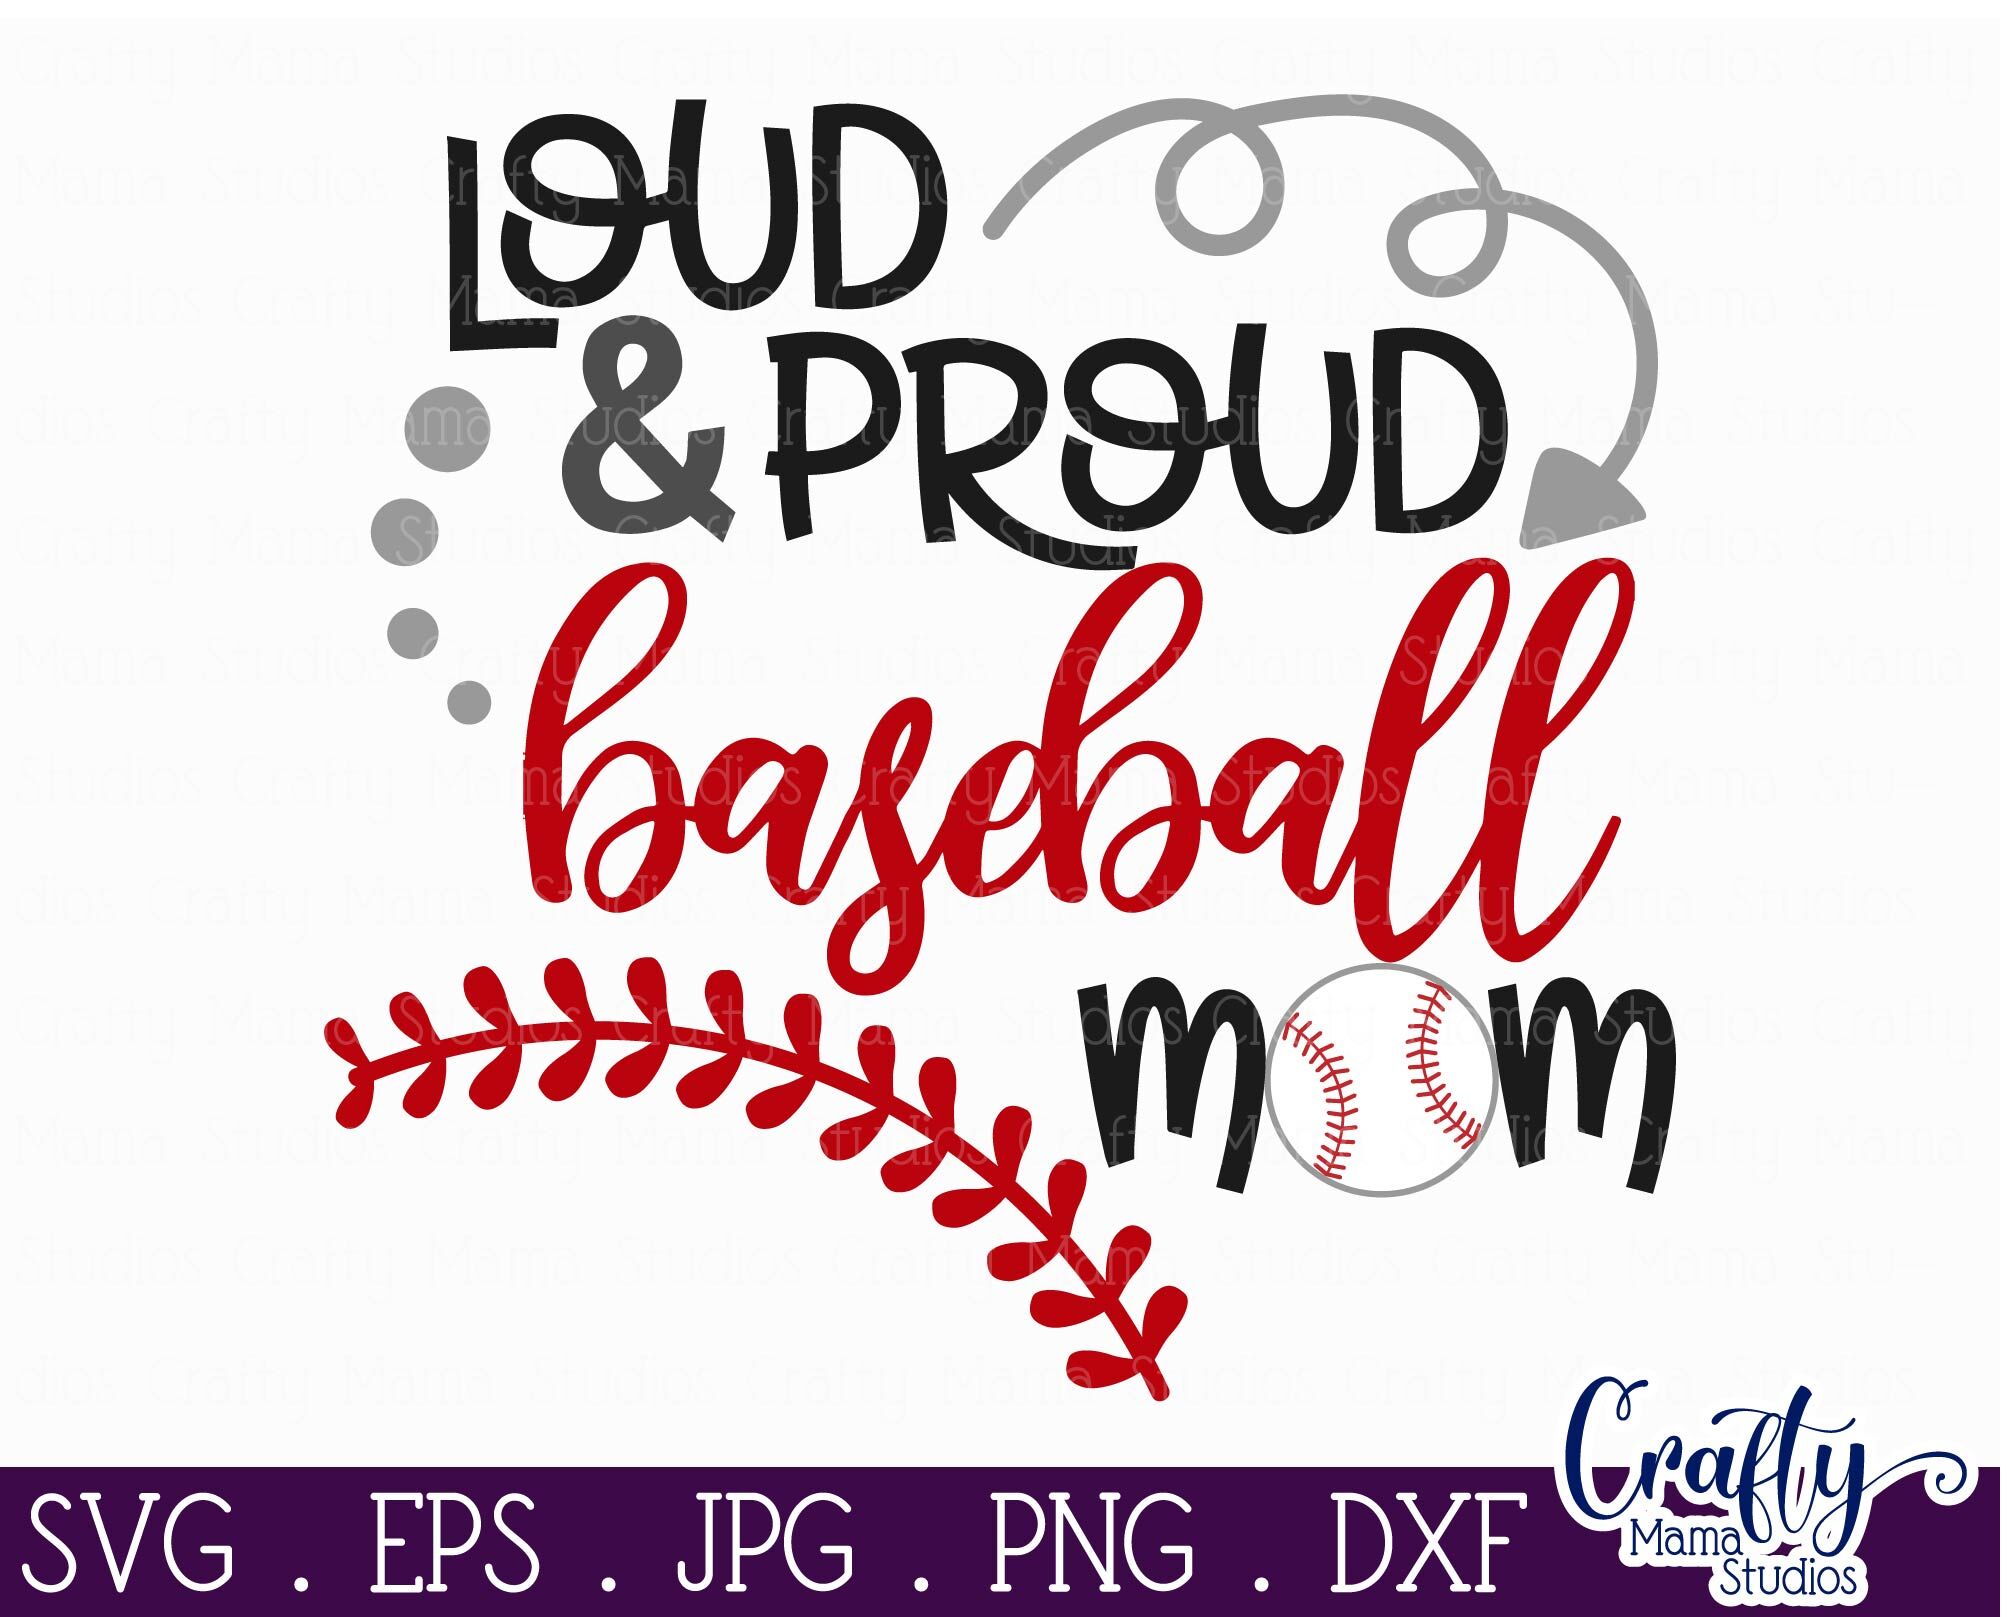 Download Loud and Proud Baseball Mom Svg, Mom Life Svg By Crafty Mama Studios | TheHungryJPEG.com